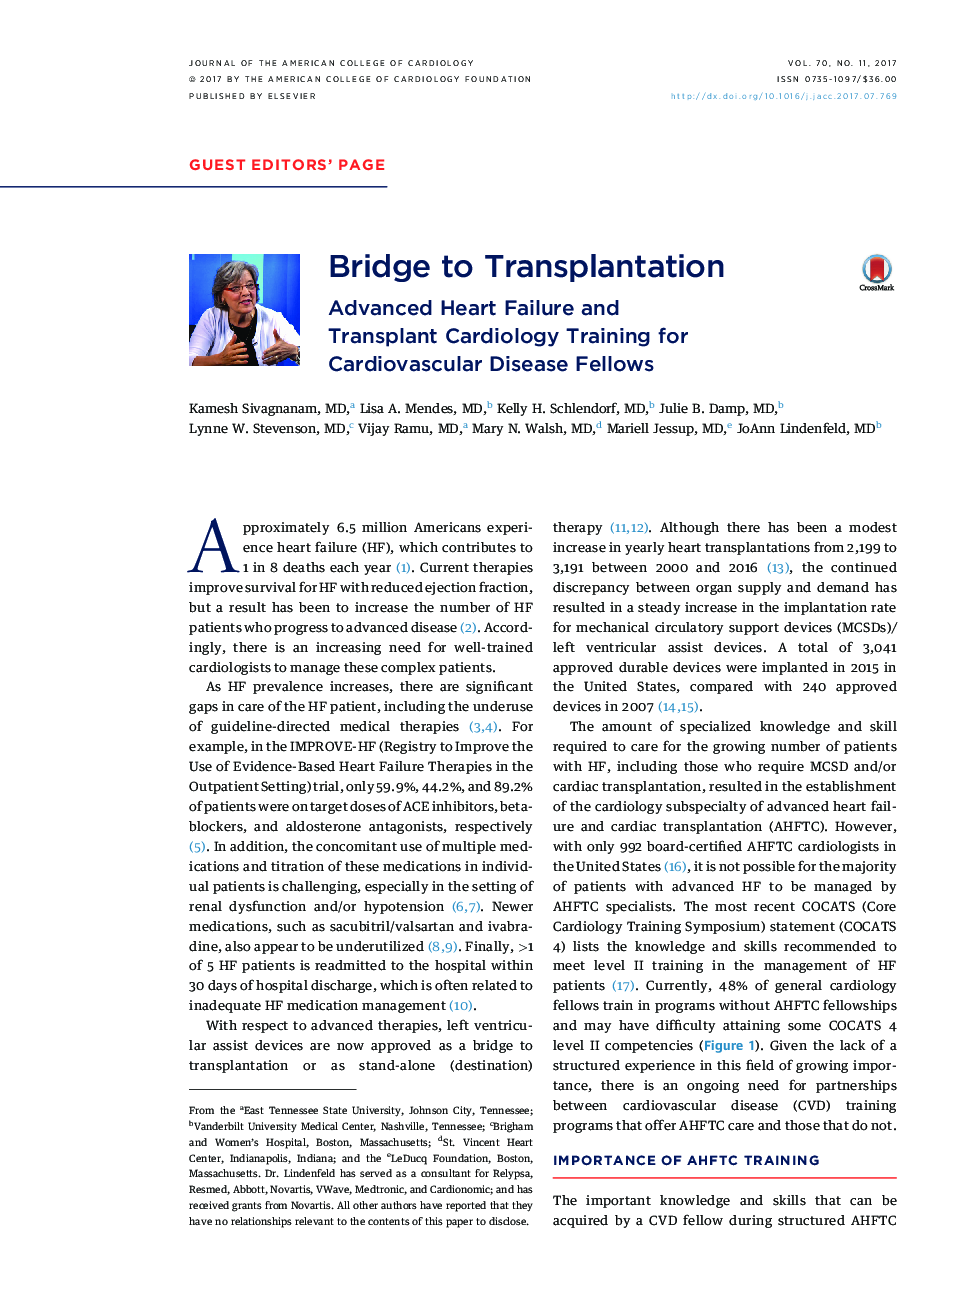 Bridge to Transplantation